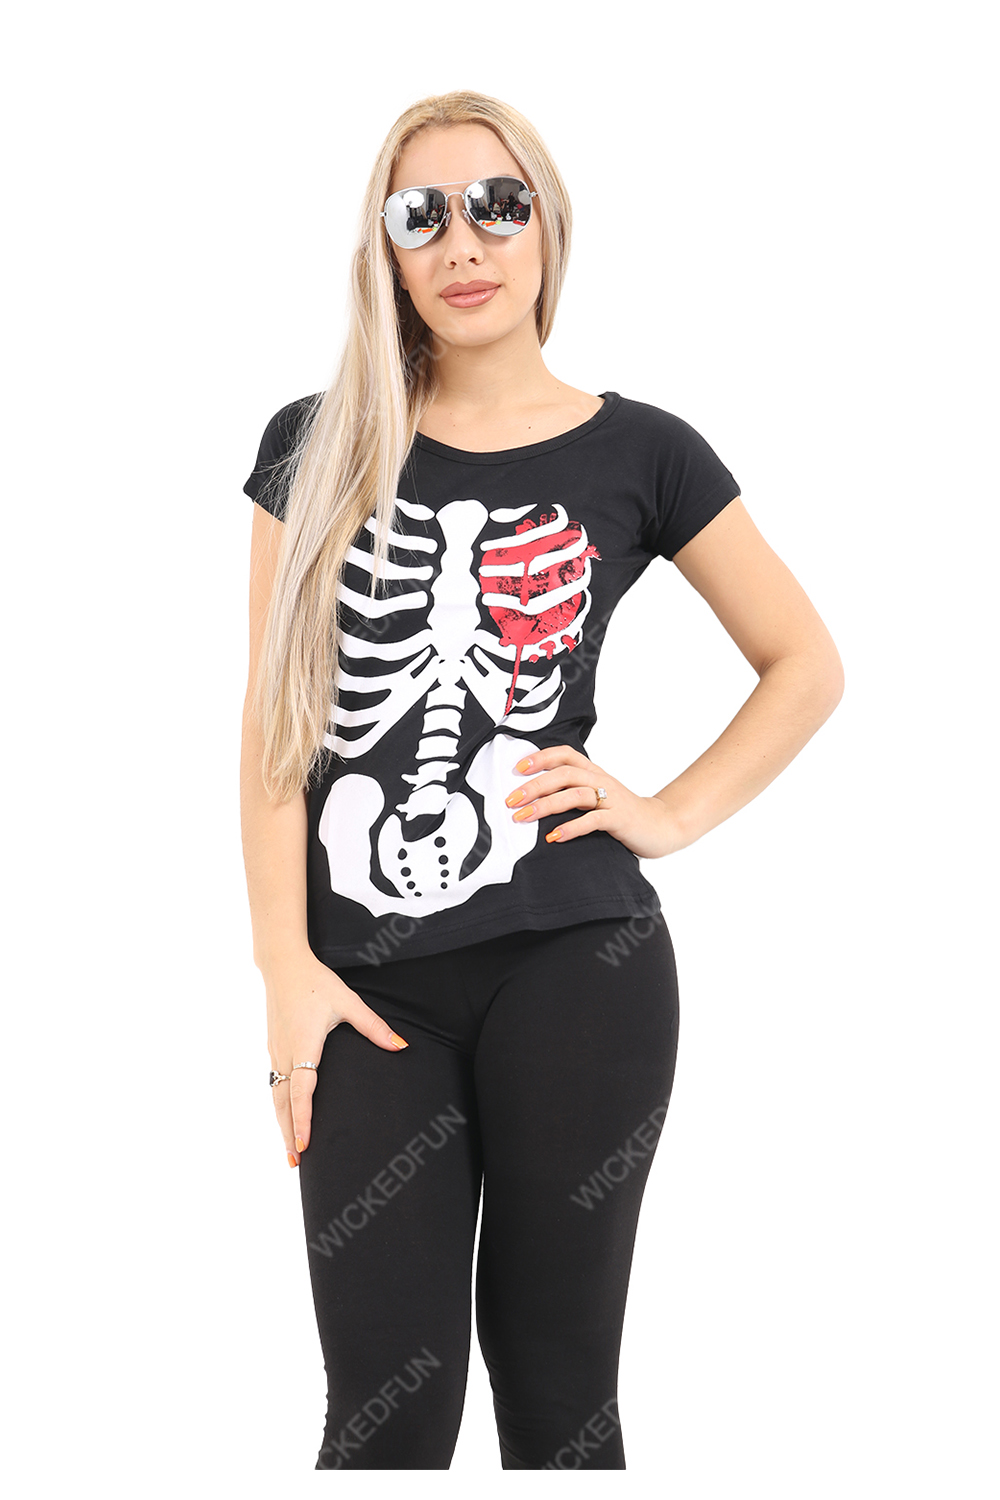 Wickedfun Black Skeleton W Bloody Heart Printed T-Shirt